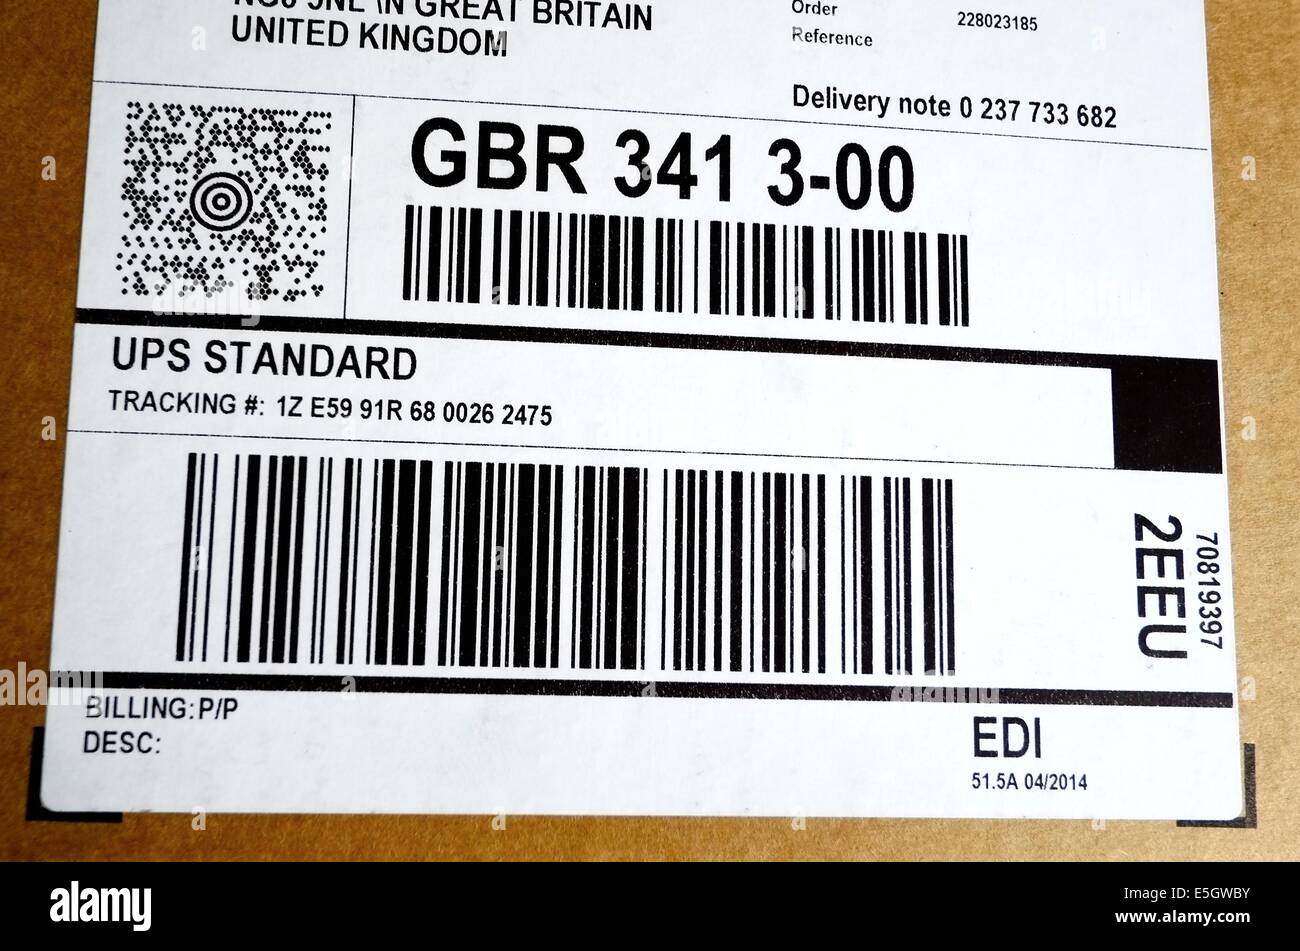 UPS Tracking barcode England Regno Unito Foto stock - Alamy